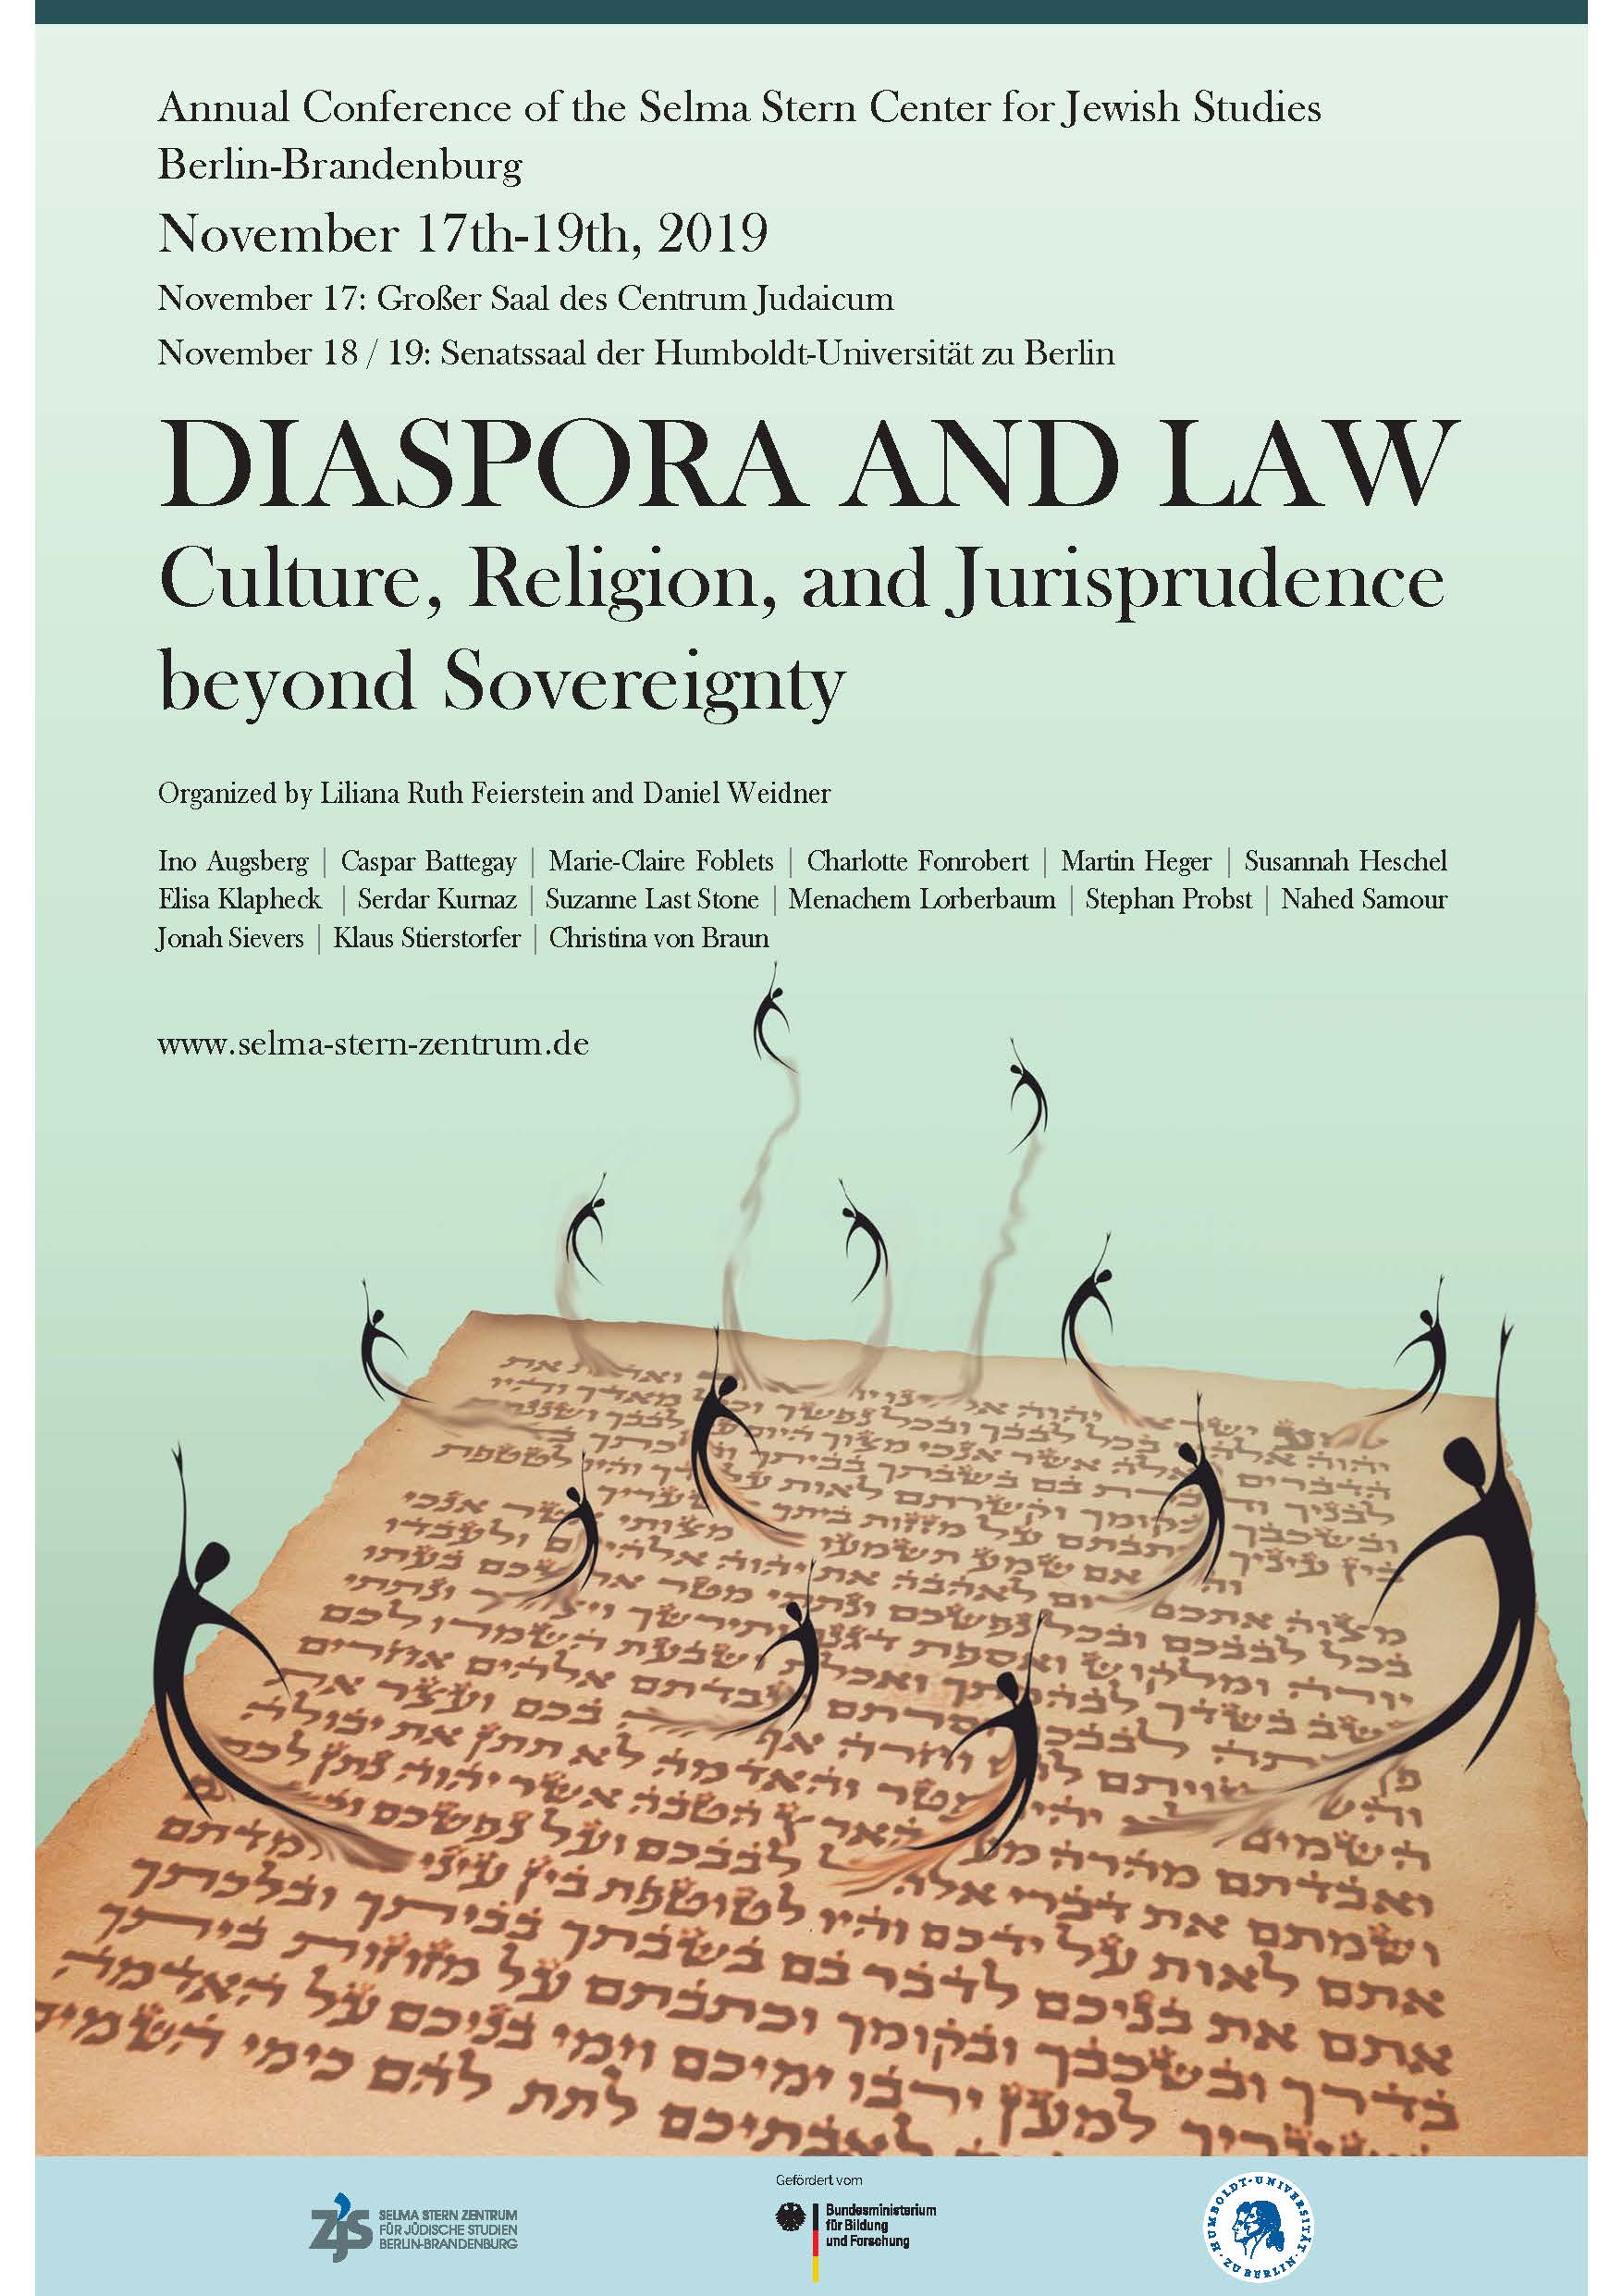 Diaspora-and-Law_Poster.jpg